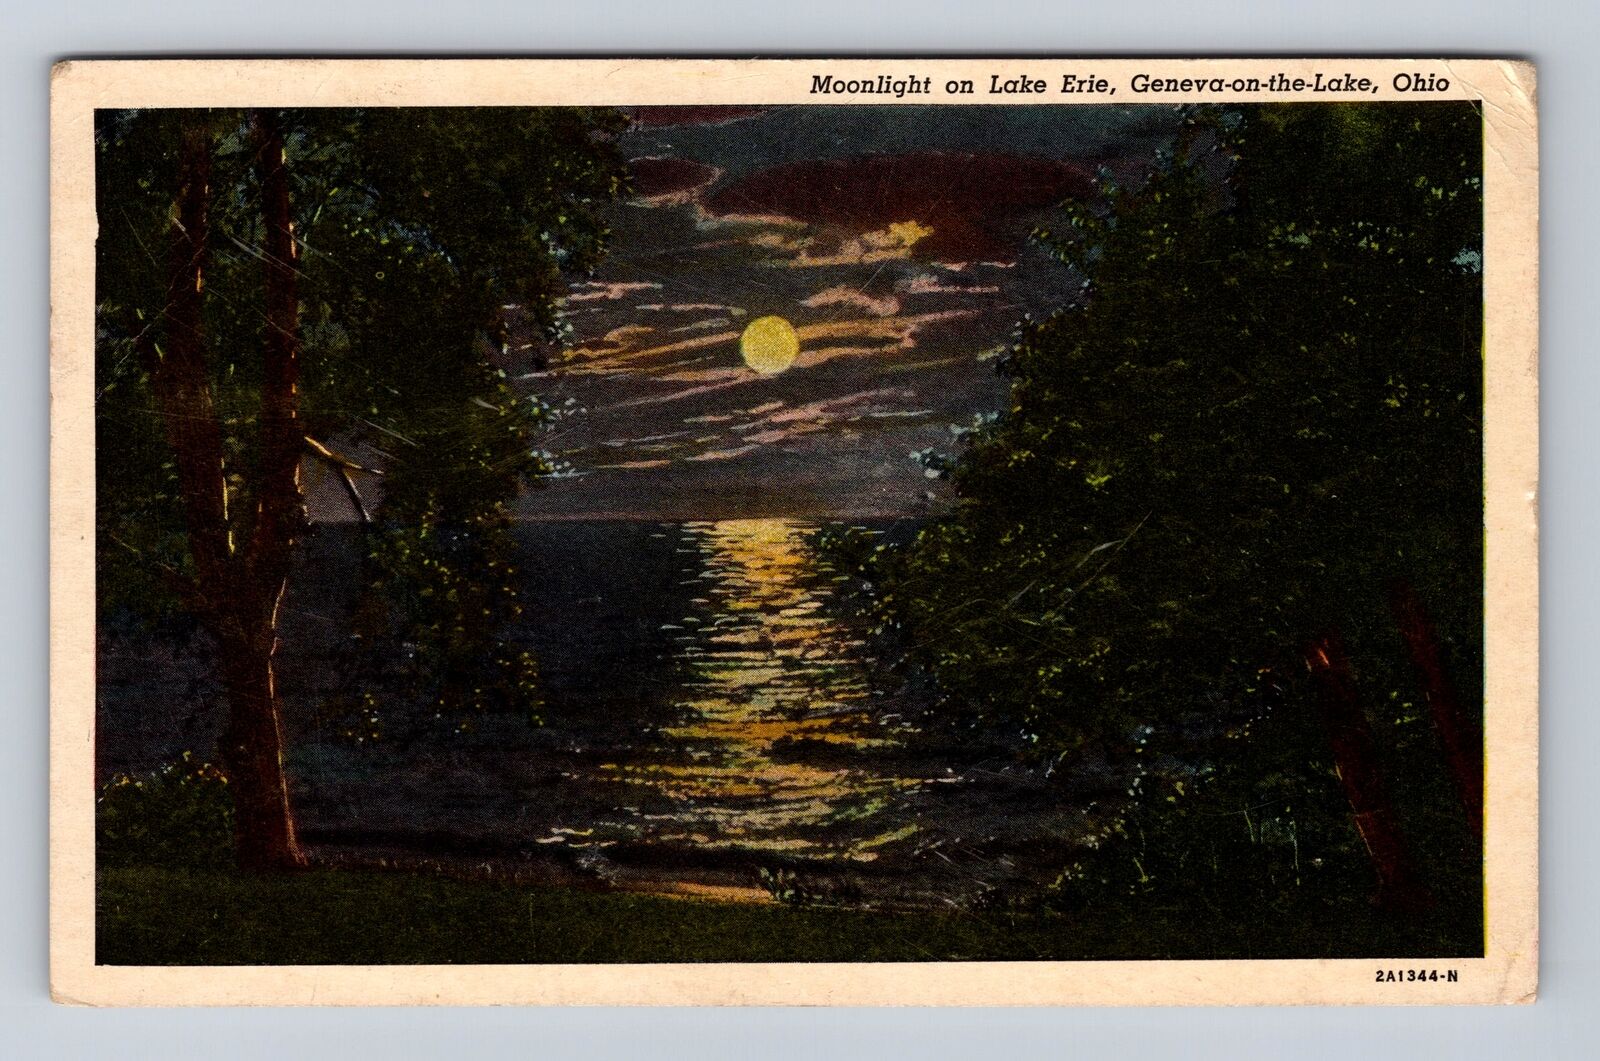 Geneva On The Lake OH-Ohio, Moonlight On Lake Erie, Vintage c1954 Postcard